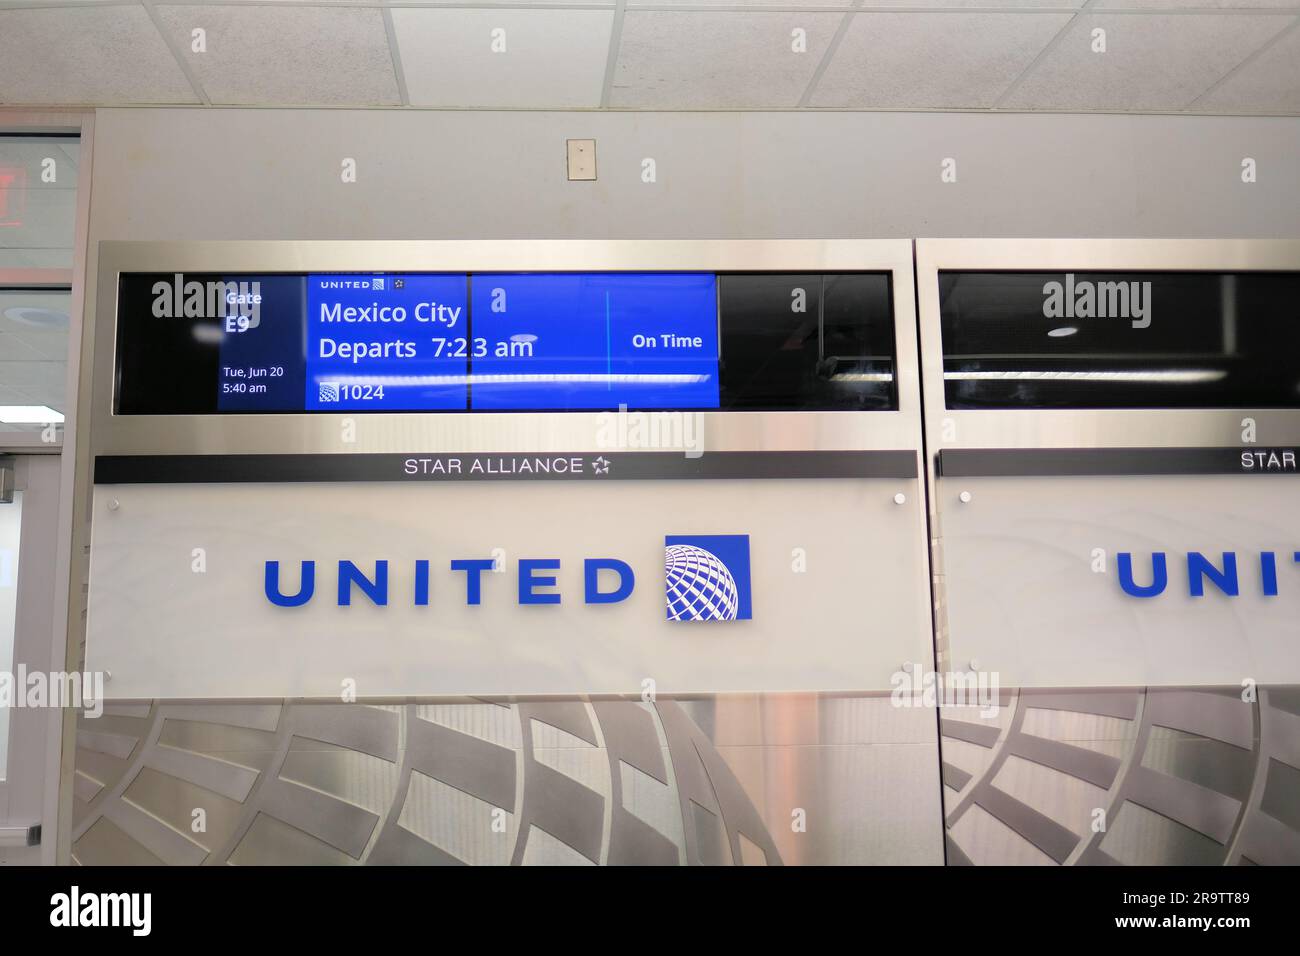 Informationsmonitor an Gate E9, Terminal E, am George Bush International Airport in Houston, Texas mit Abfluginformationen für Mexiko-Stadt, Mexiko. Stockfoto